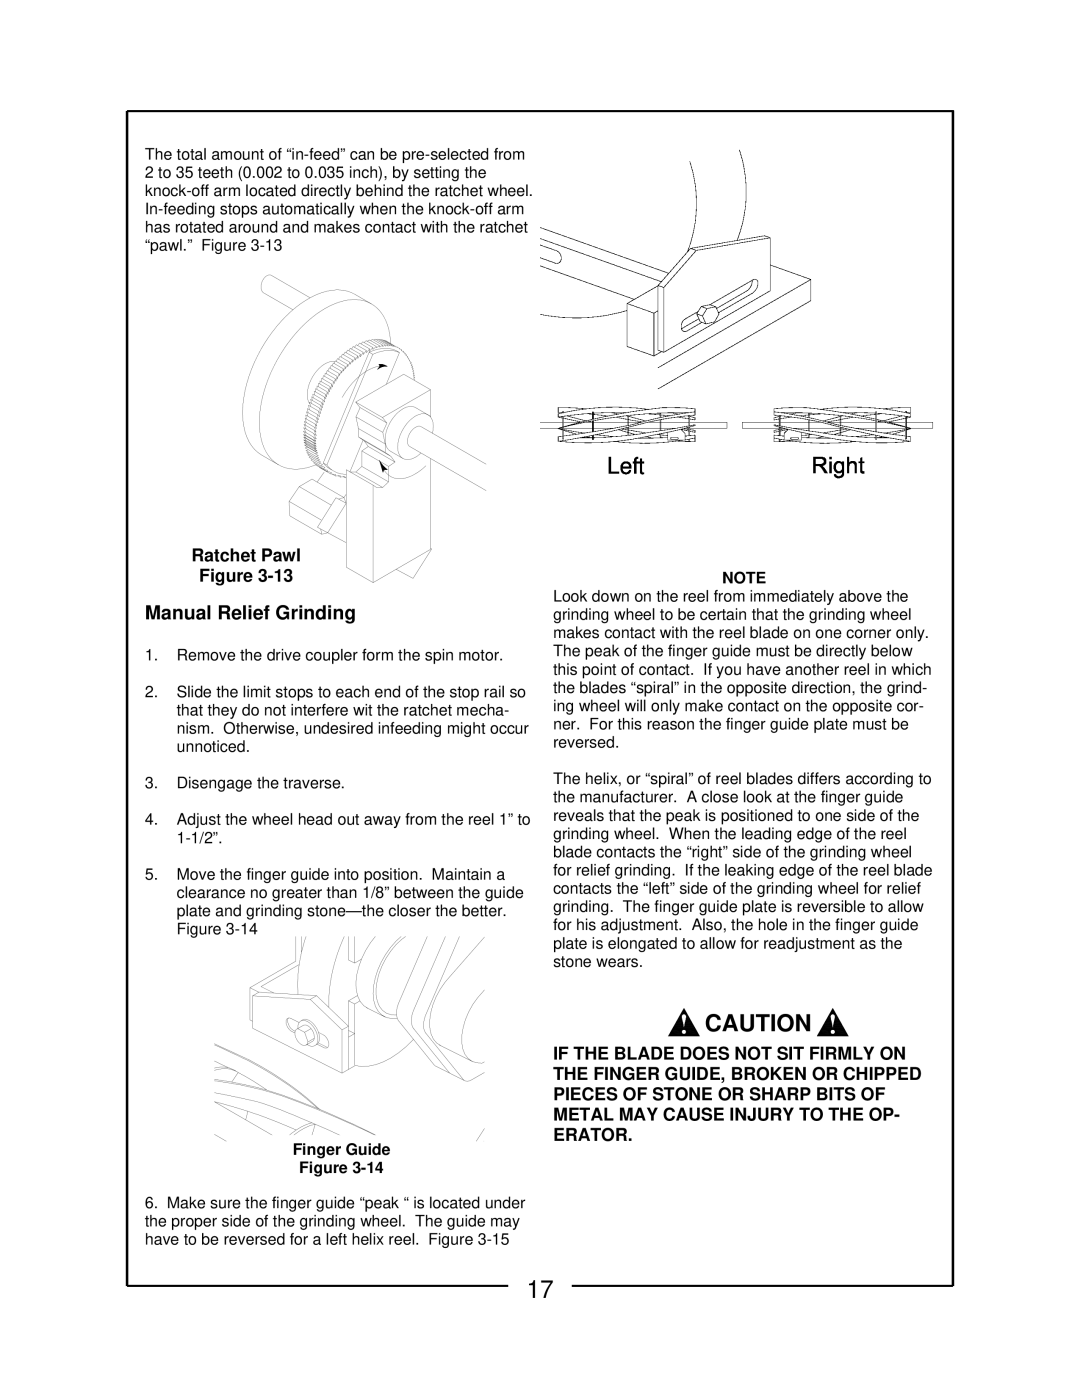 Locke RS-5100 manual Manual Relief Grinding, Left, Ratchet Pawl, Finger Guide 